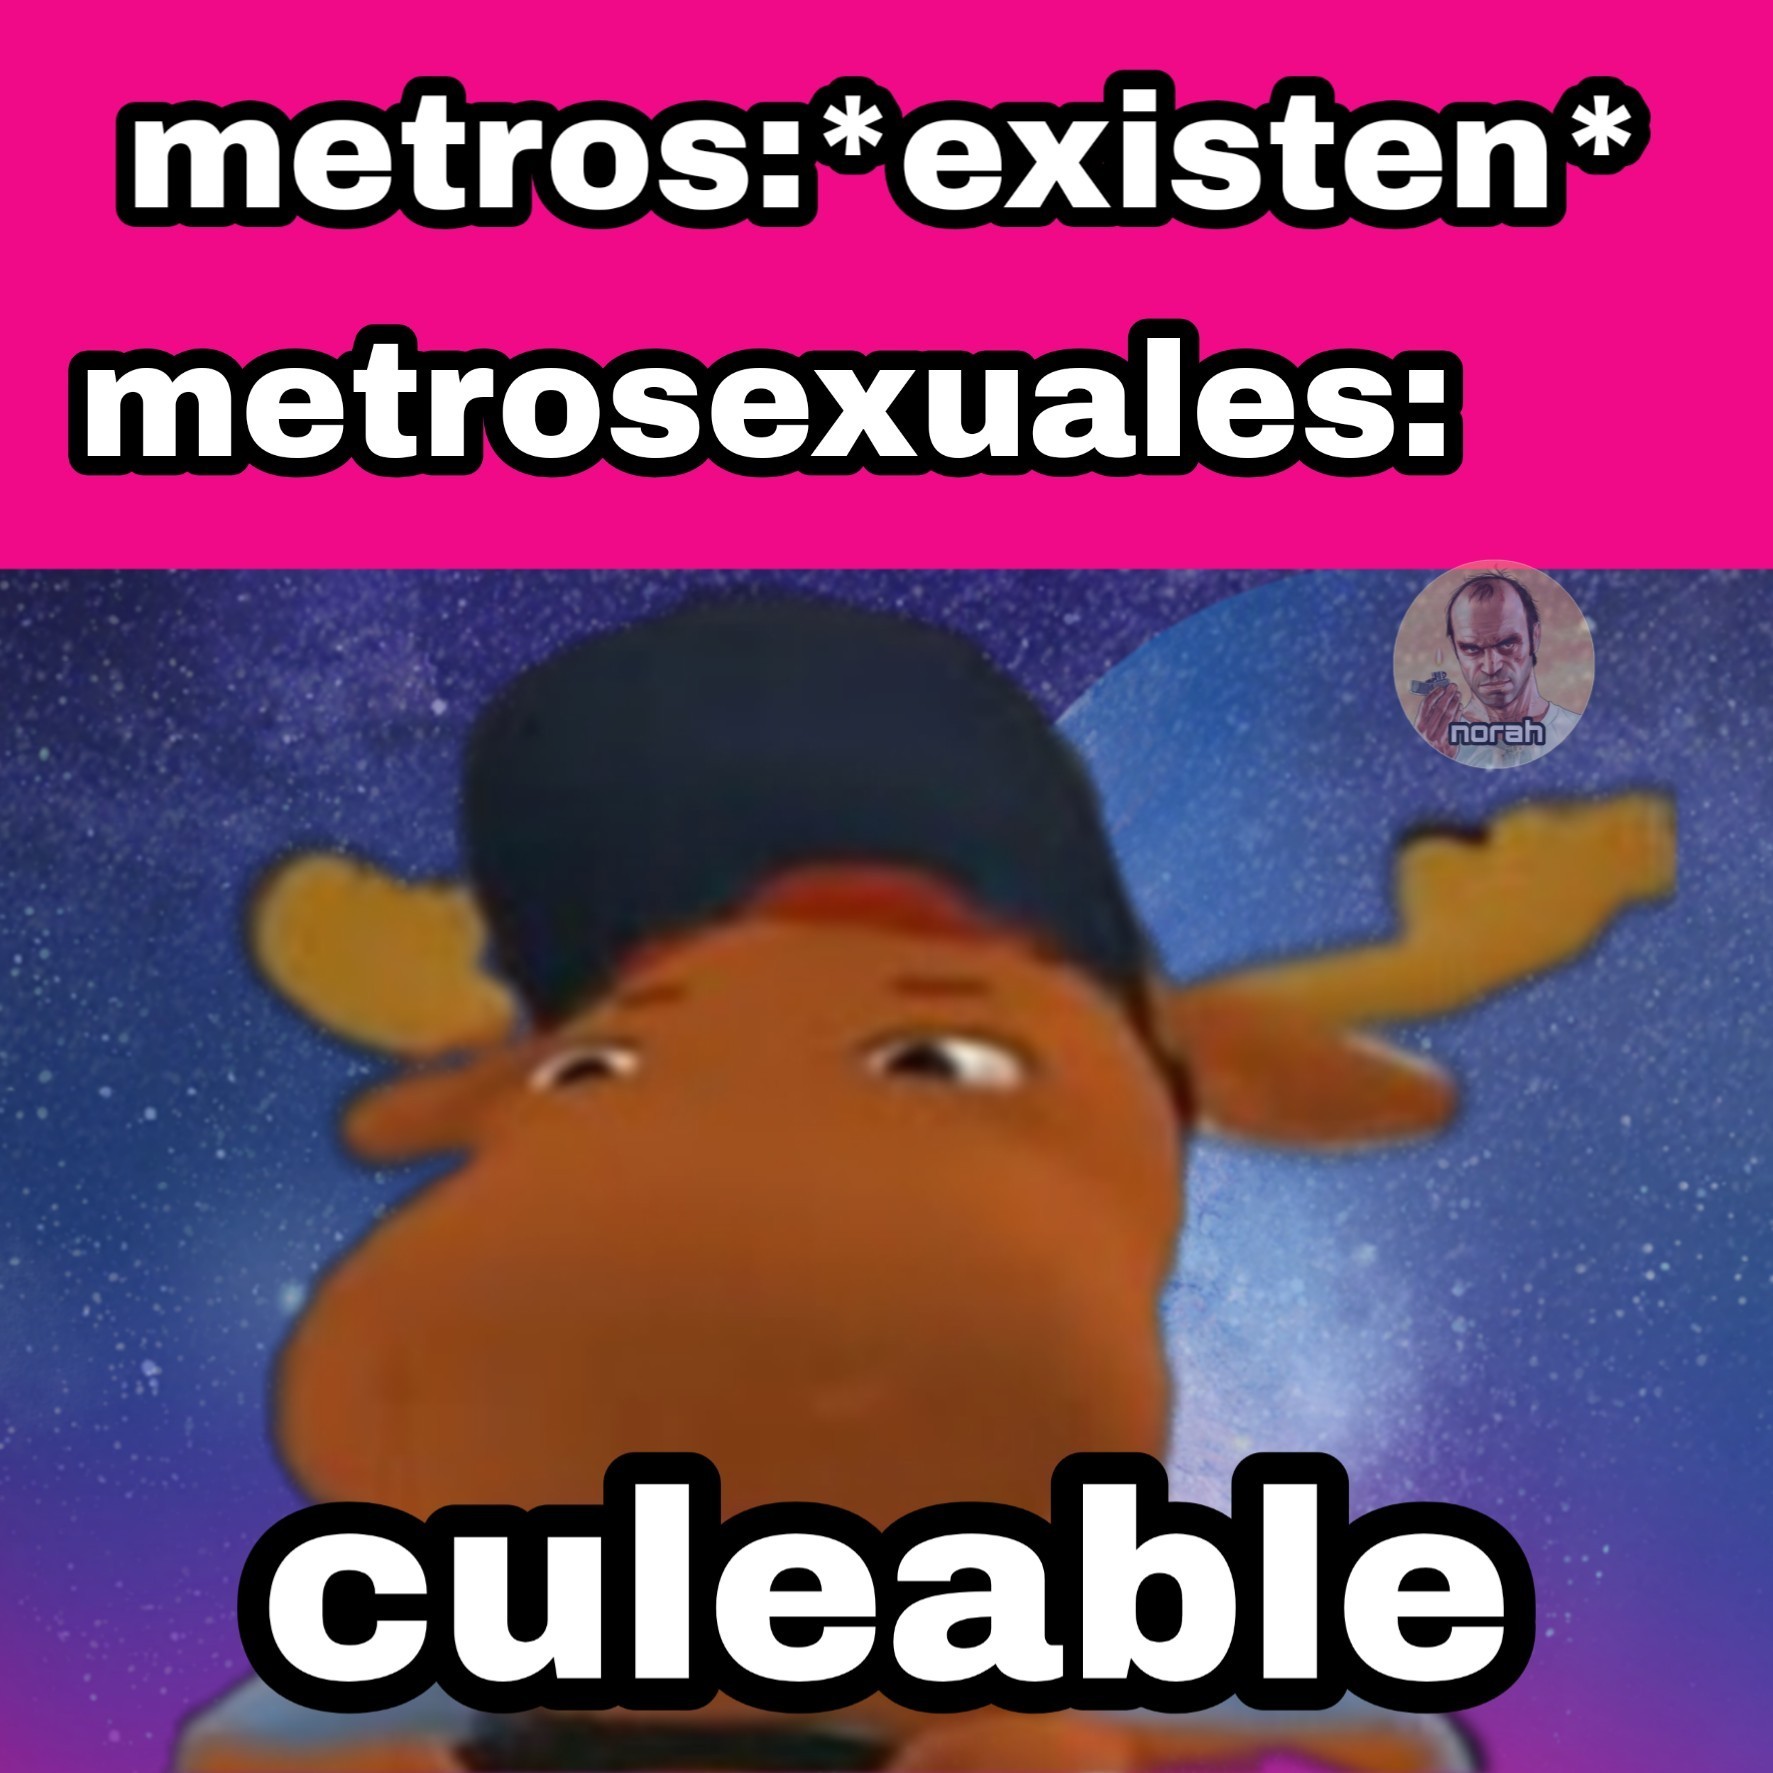 Metros - meme